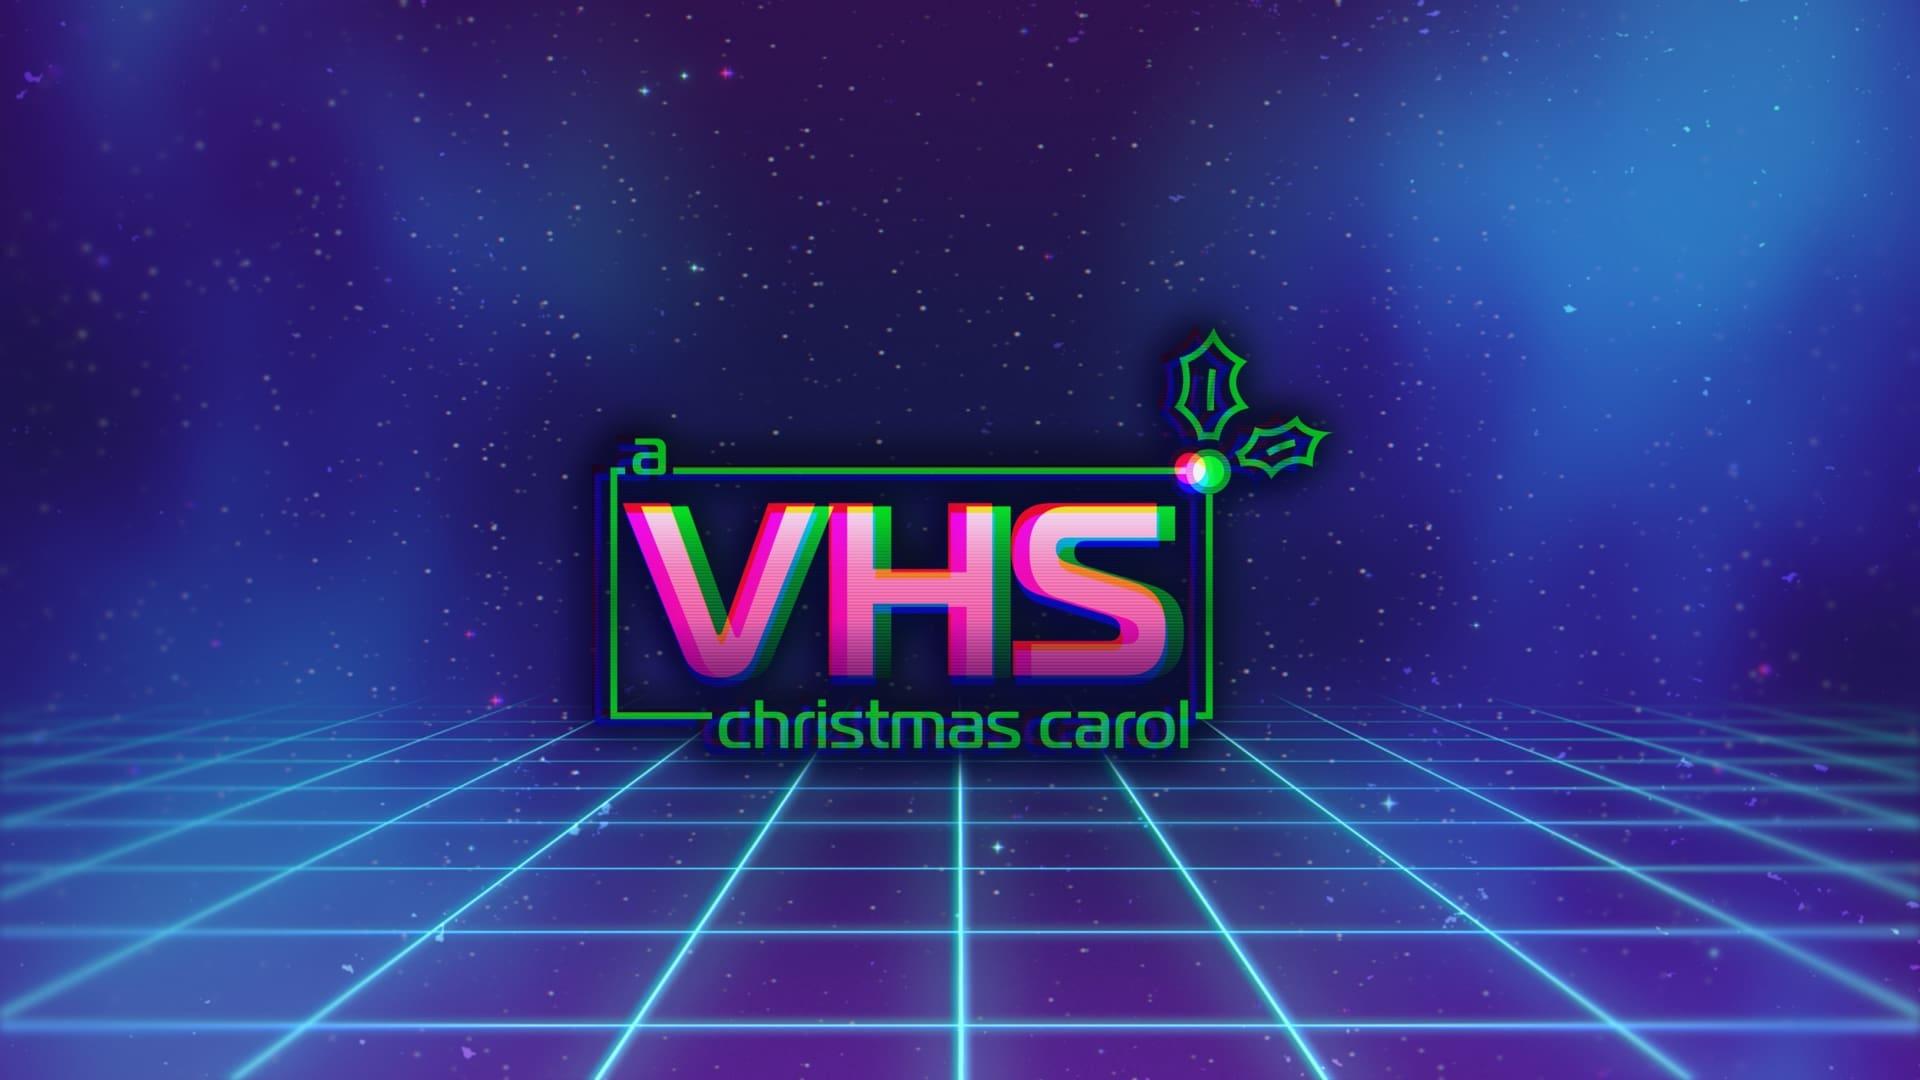 A VHS Christmas Carol backdrop